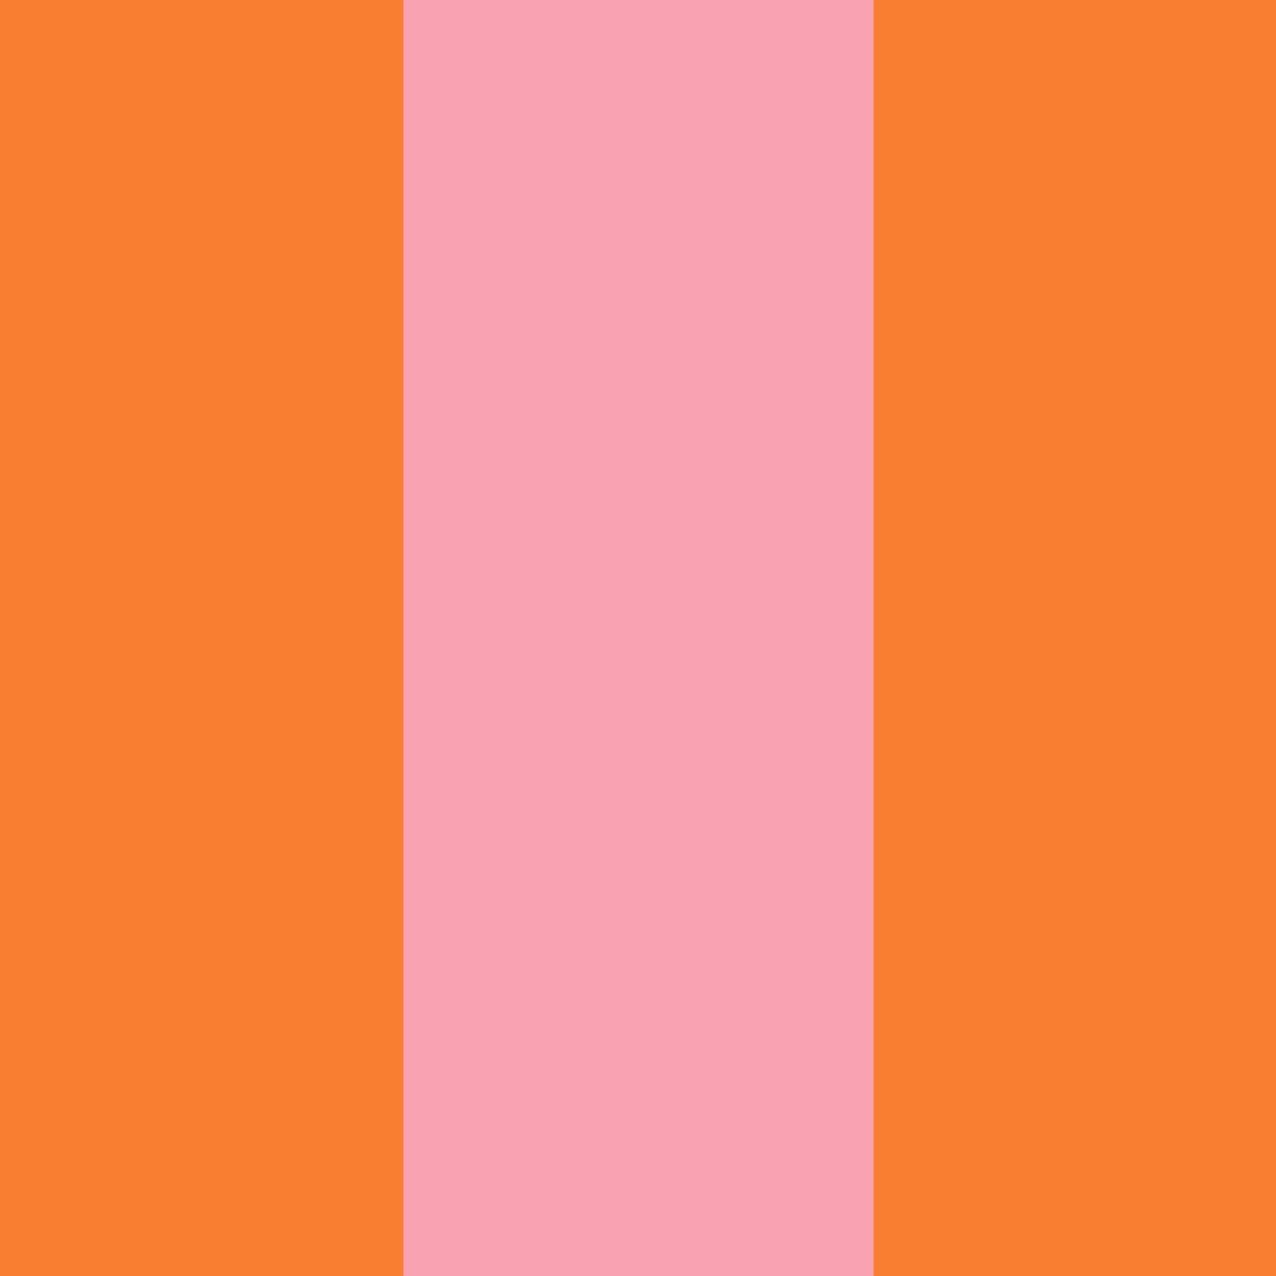 Wallpaper Sample / Pink Orange 3 in Stripes Wallpaper dombezalergii